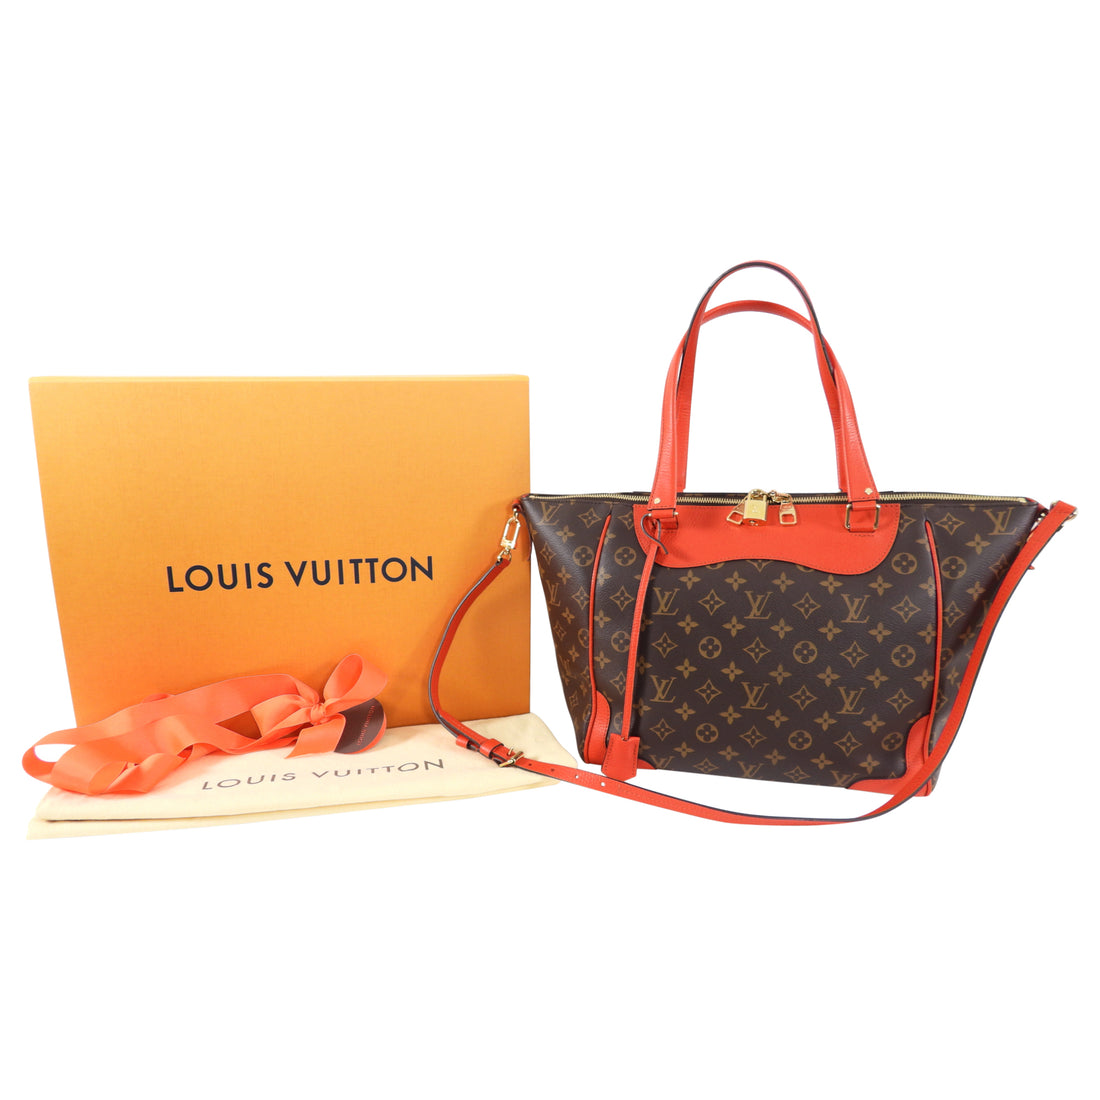 My Comparison of My Louis Vuitton Retiro PM Versus My Estrela